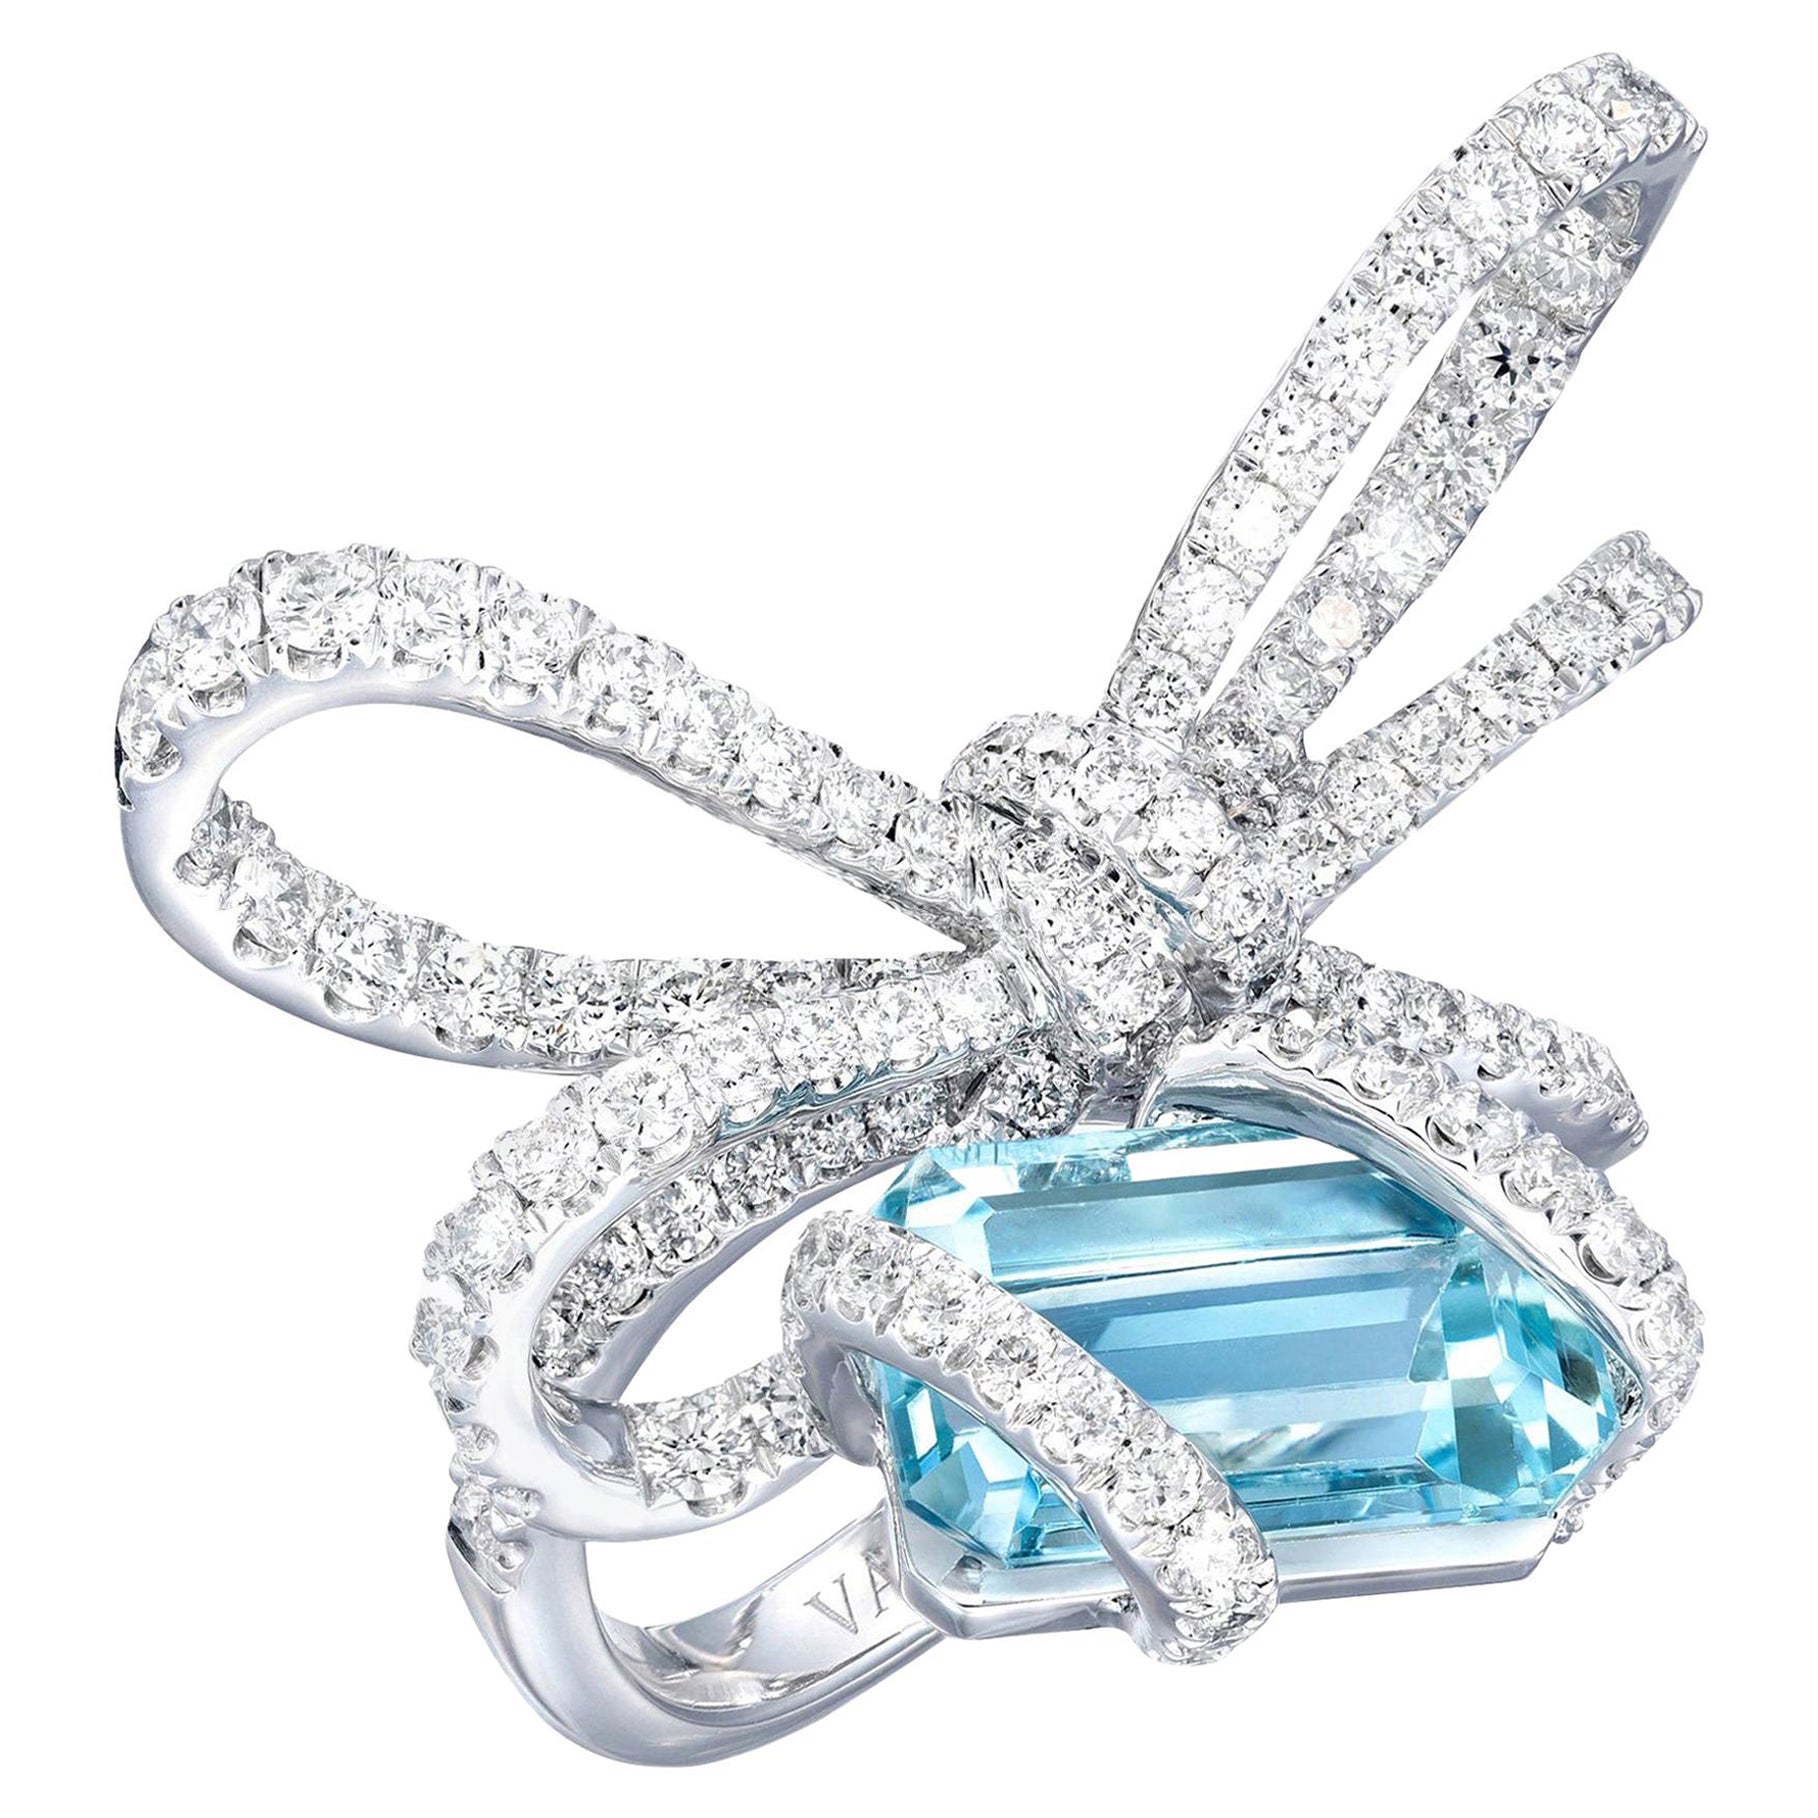 18 Karat White Gold, White Diamonds and Aquamarine Cocktail Ring